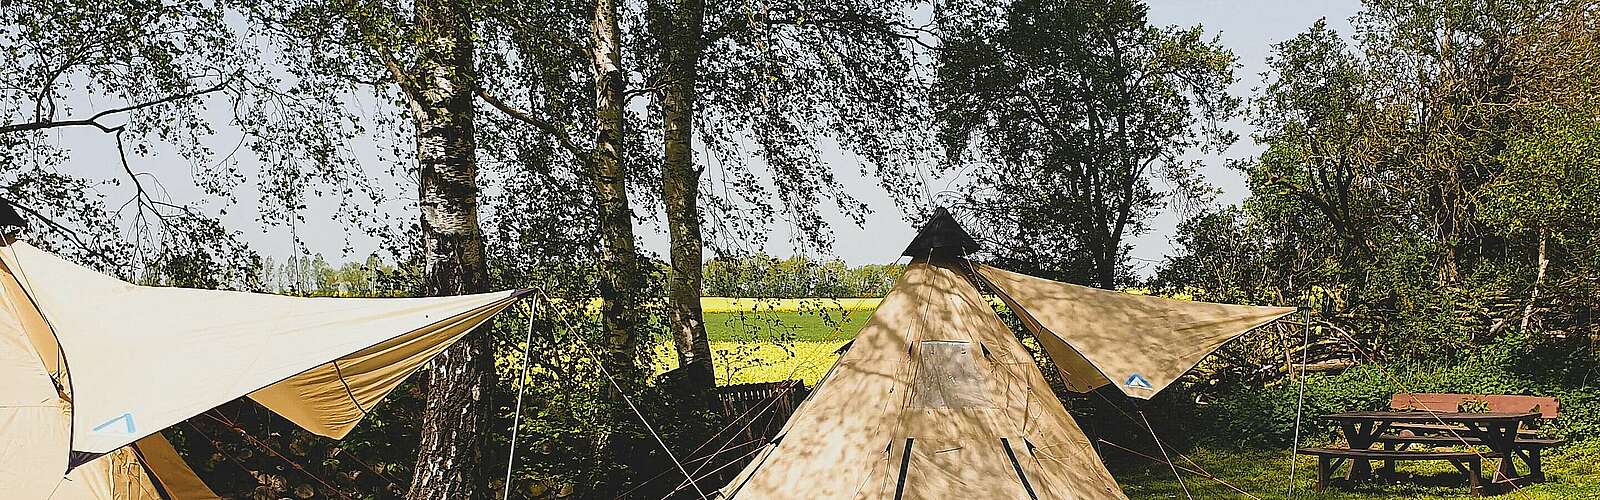 Zelte vor Rapsfeld in Oehna,
        
    

        Foto: Flaeming Camping Oehna/Fotograf / Lizenz - Media Import